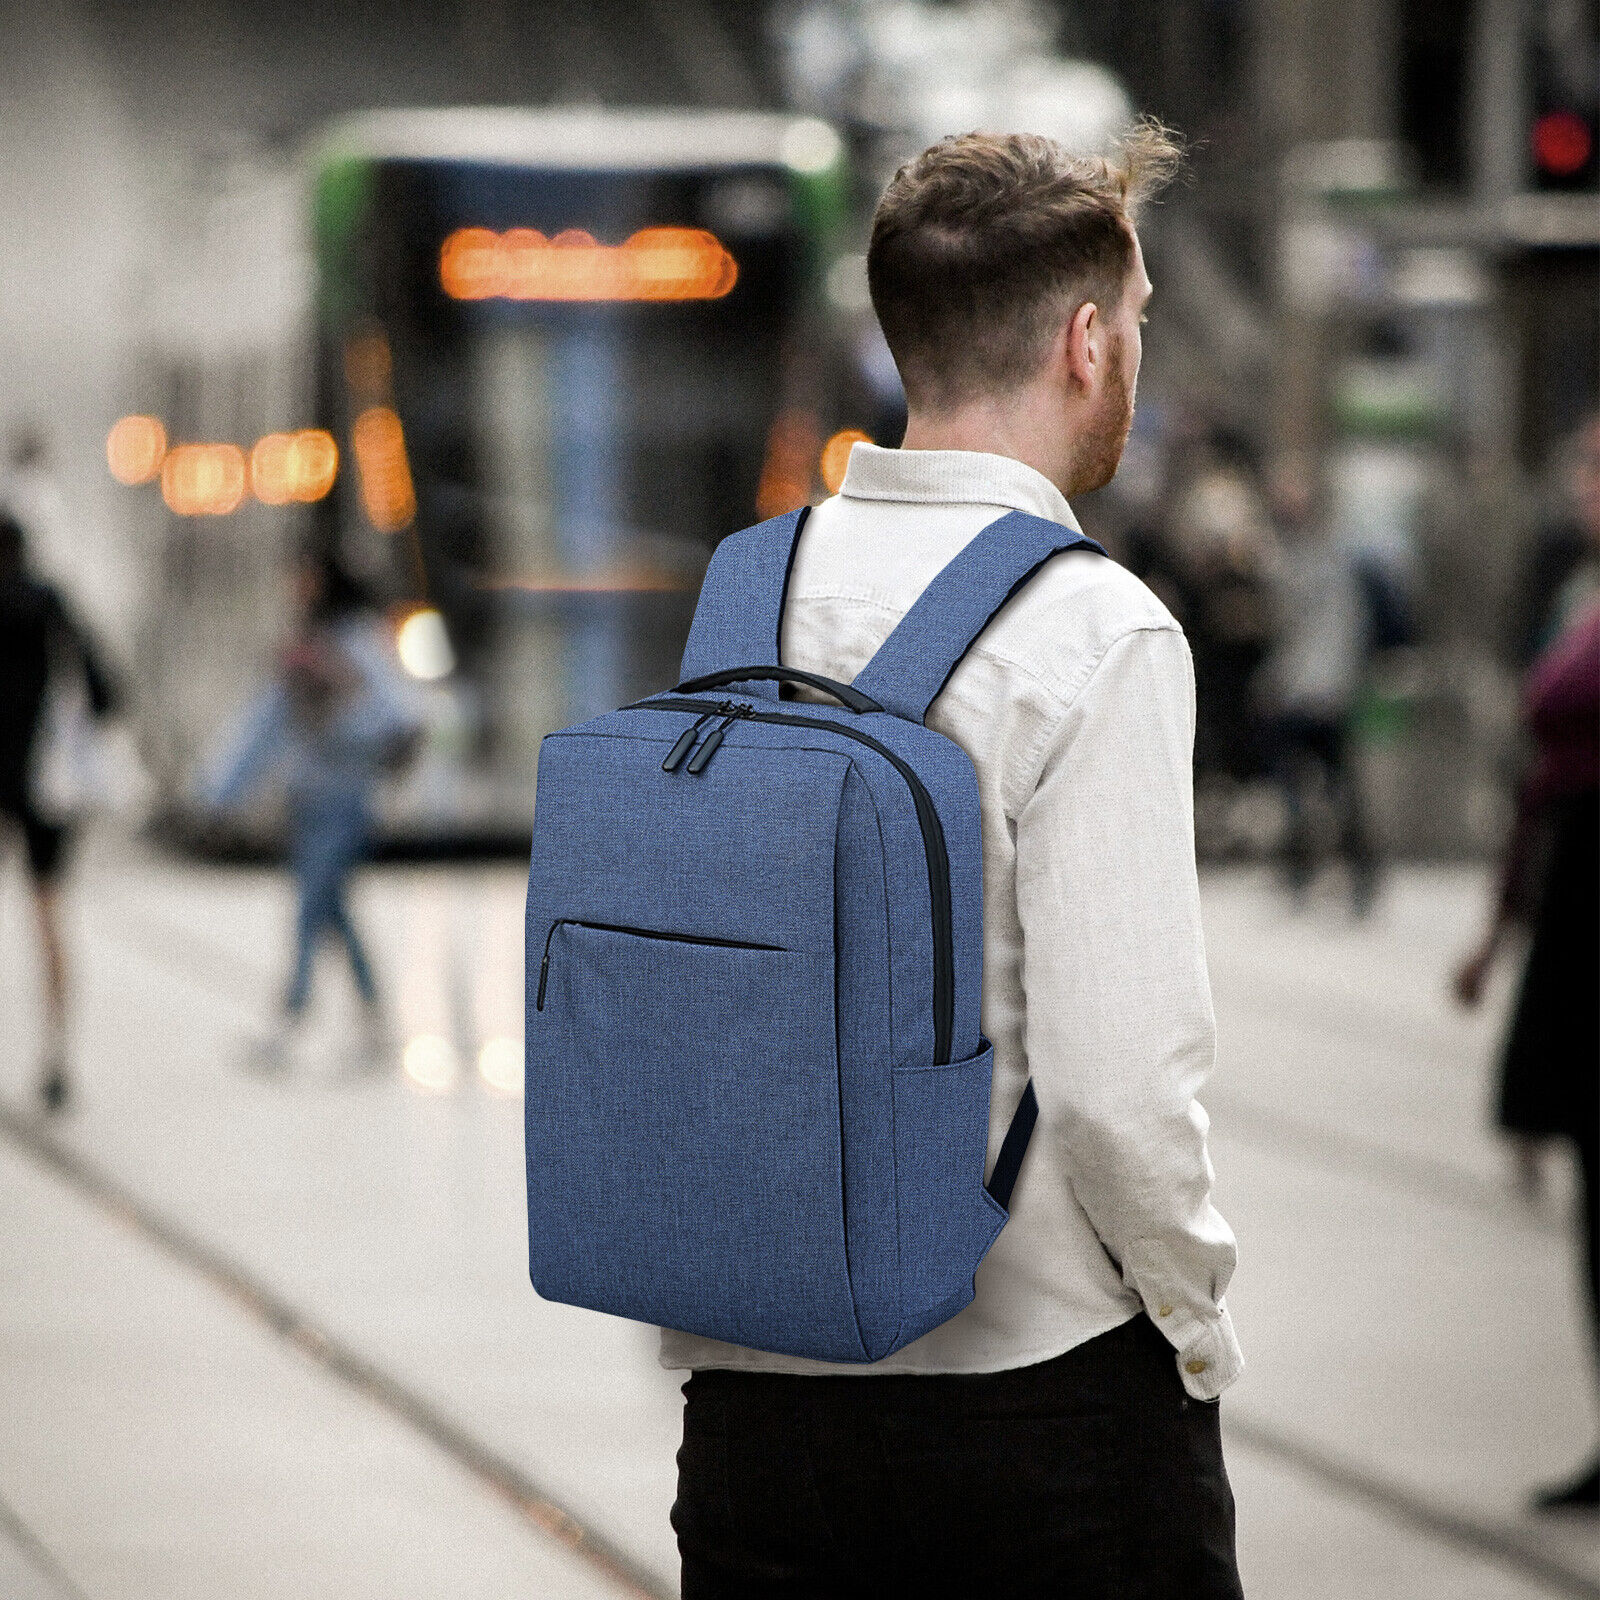 Novaa Bags 16" Slim Casual Waterproof Laptop Backpack with USB Charging Port Navy - image 4 of 6